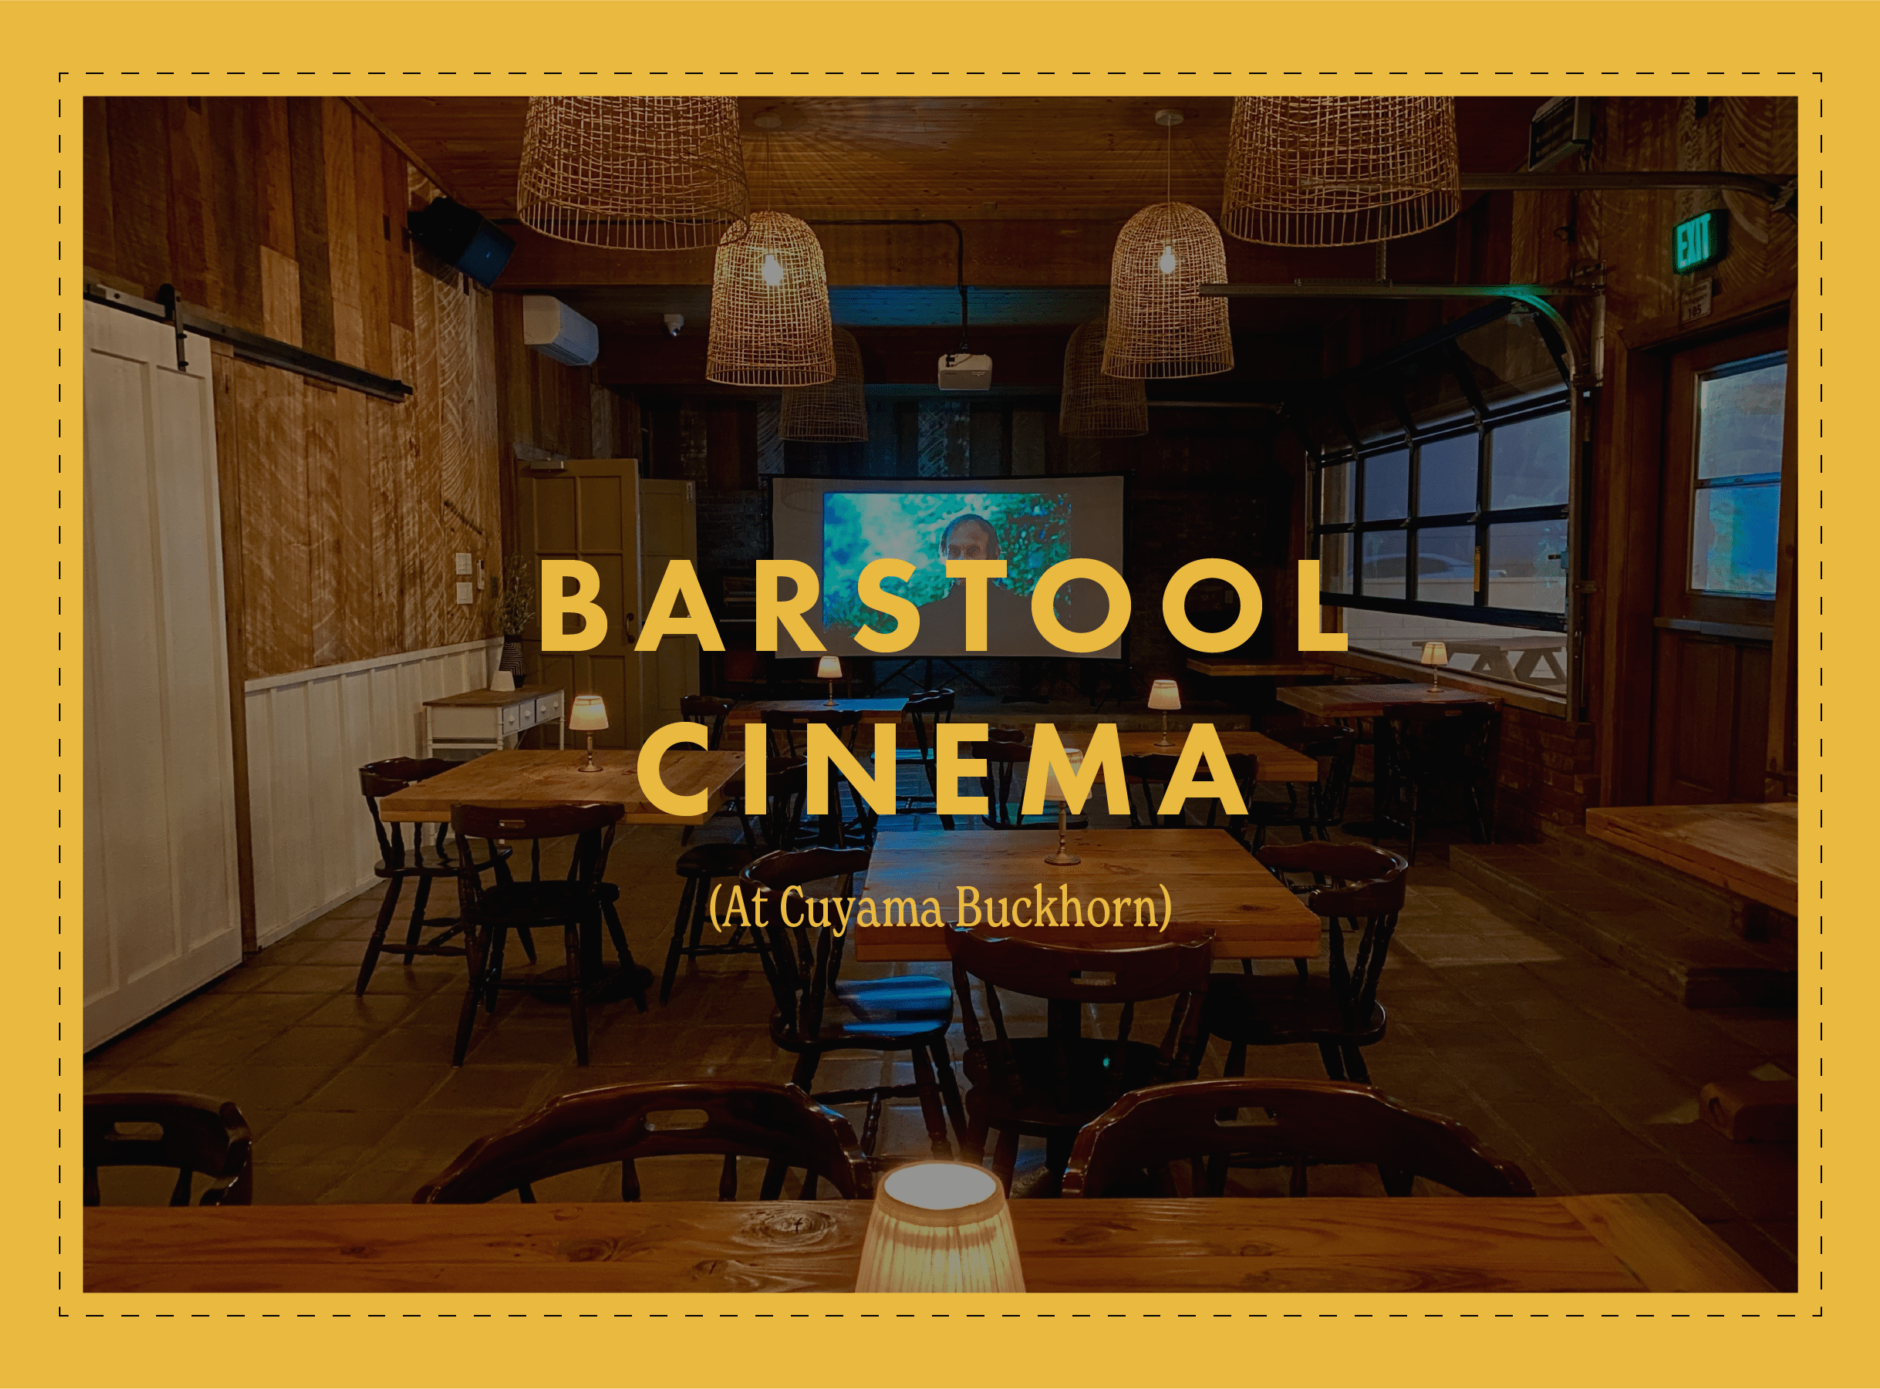 Barstool Cinema, Cuyama Buckhorn